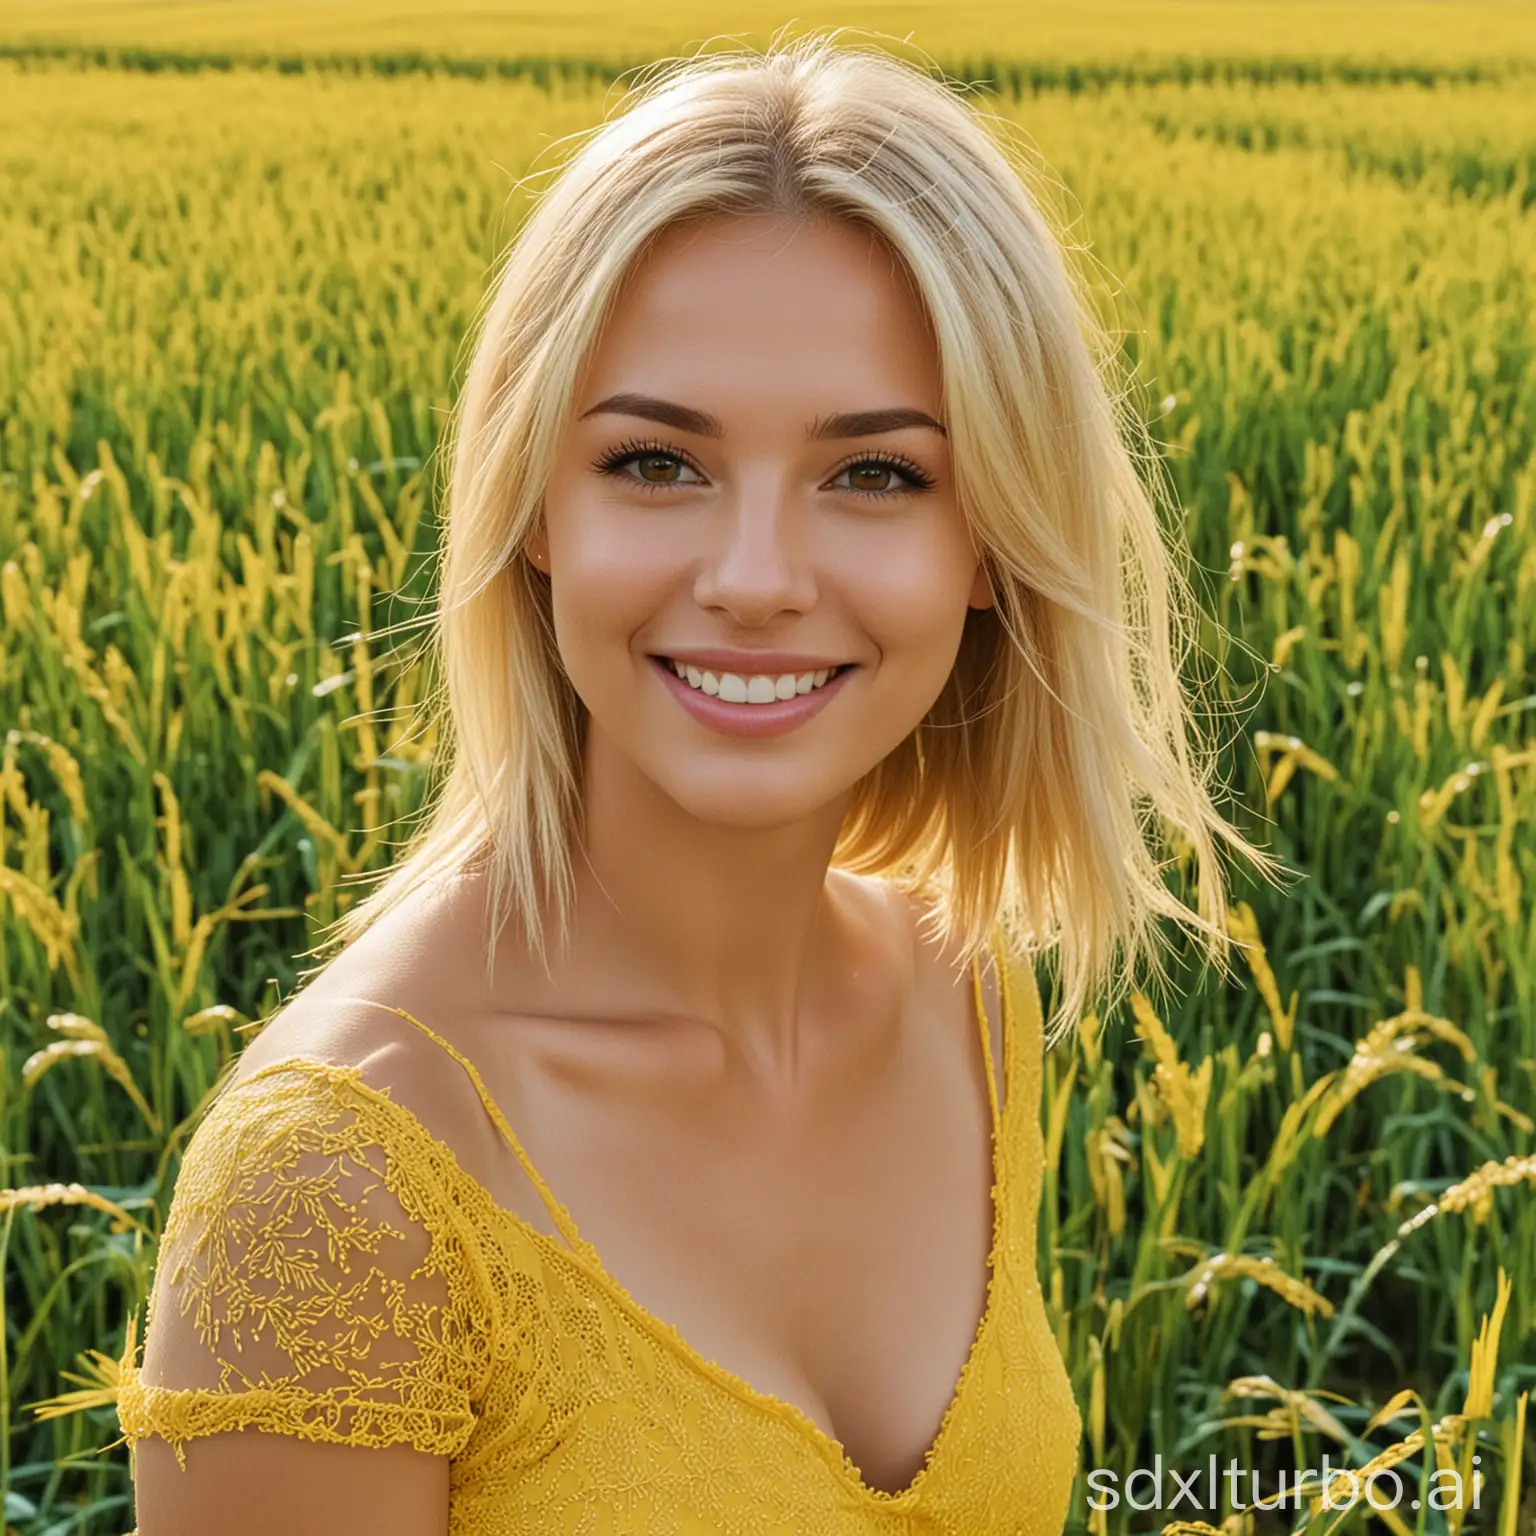 Pretty girl, golden rice fields, blonde